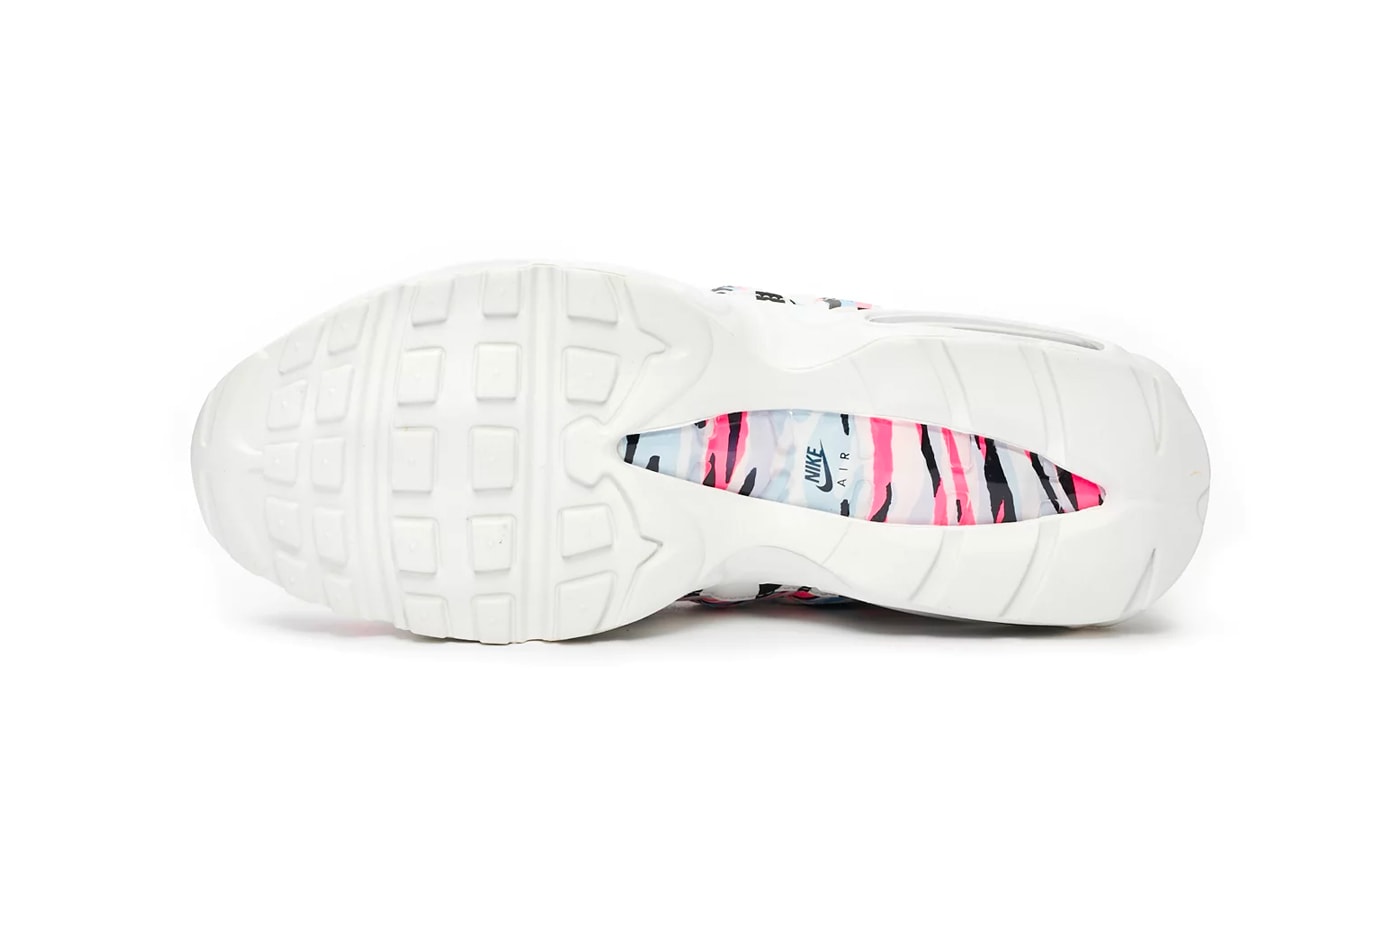 Nike Air Max 95 CTRY Korea 25th Anniversary CW2359 100 White Black Royal Tint Racer Pink color scheme